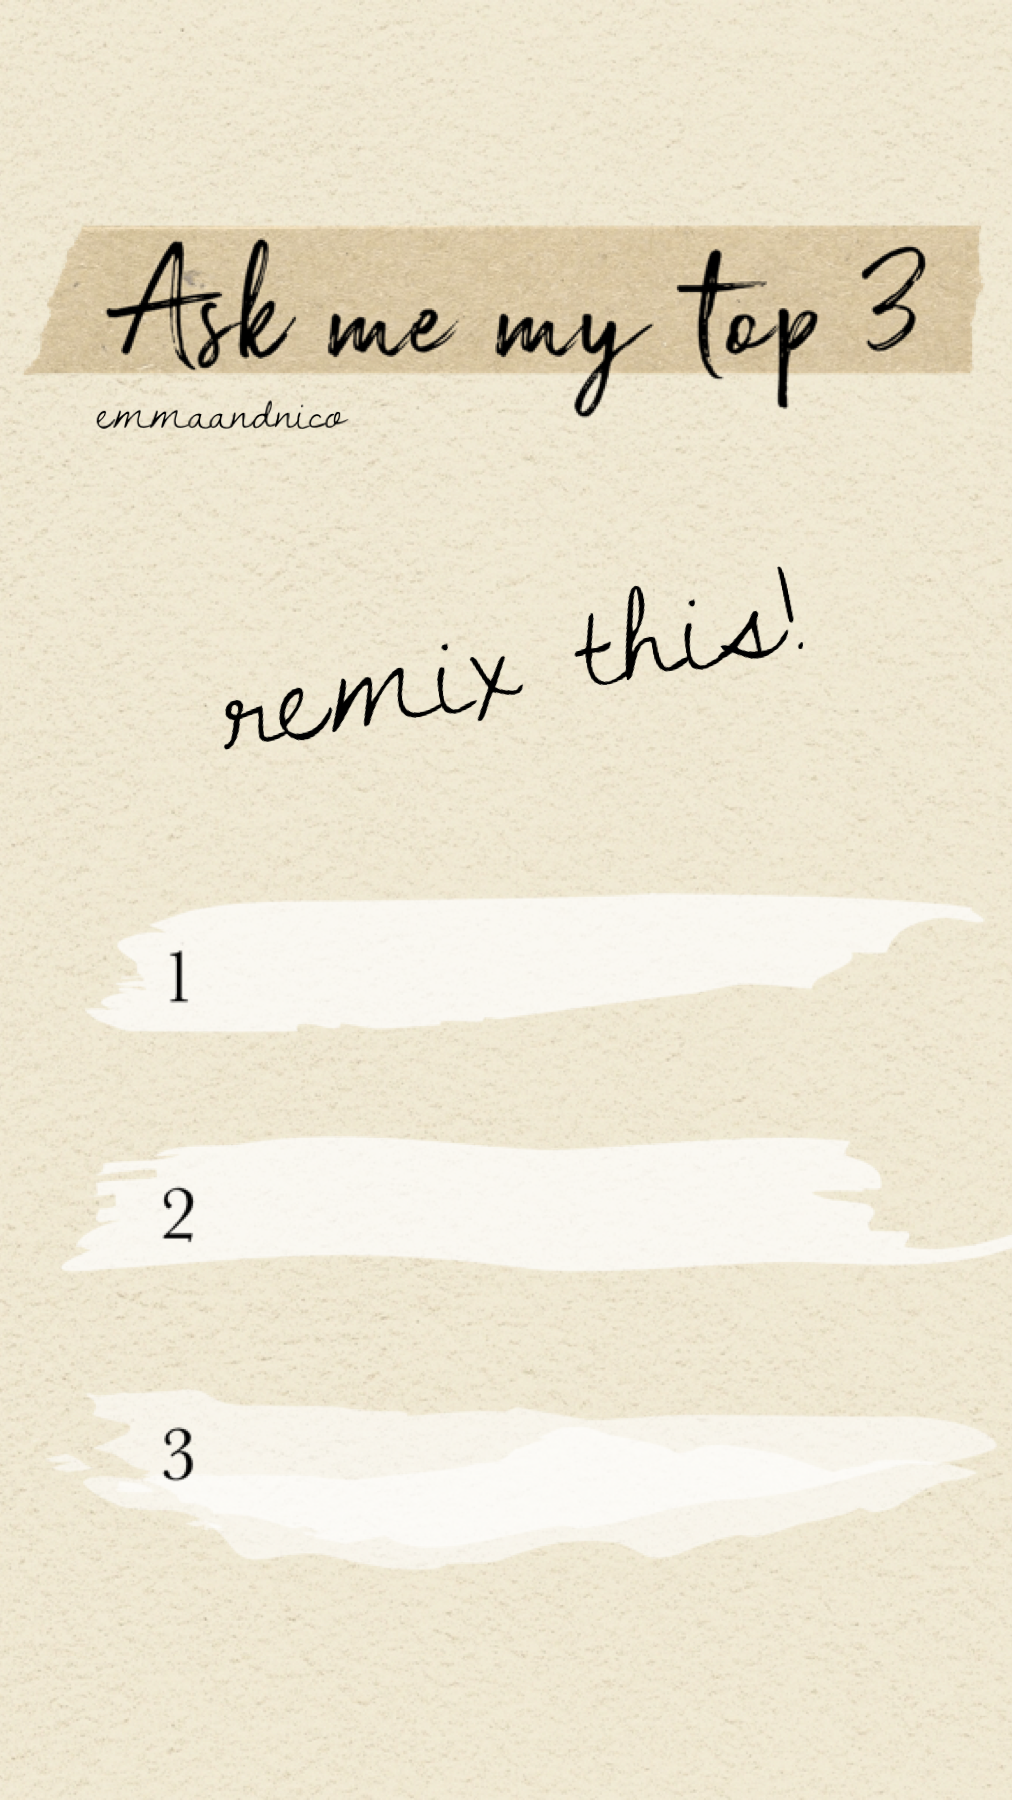 remix this!! :)